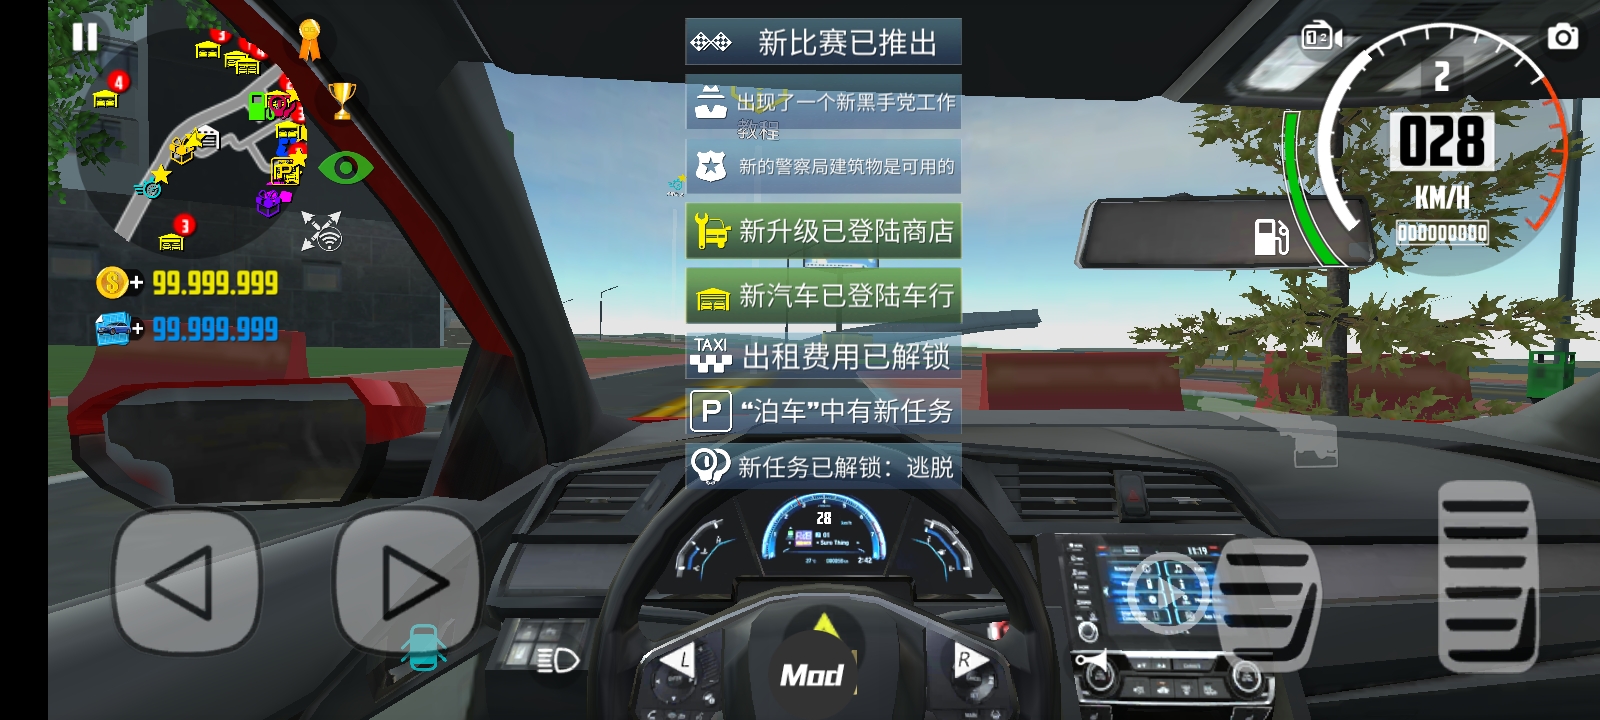 ģ2Ϳװ(Car Simulator 2)ͼ